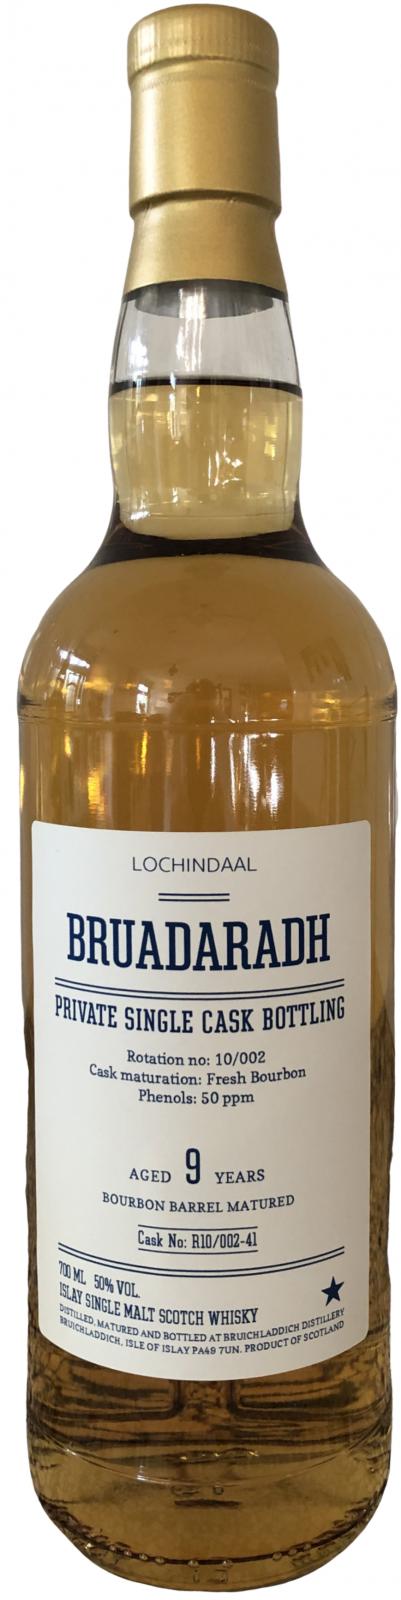 Lochindaal 2009 Bruadaradh Fresh Bourbon R10/002 41 50% 700ml